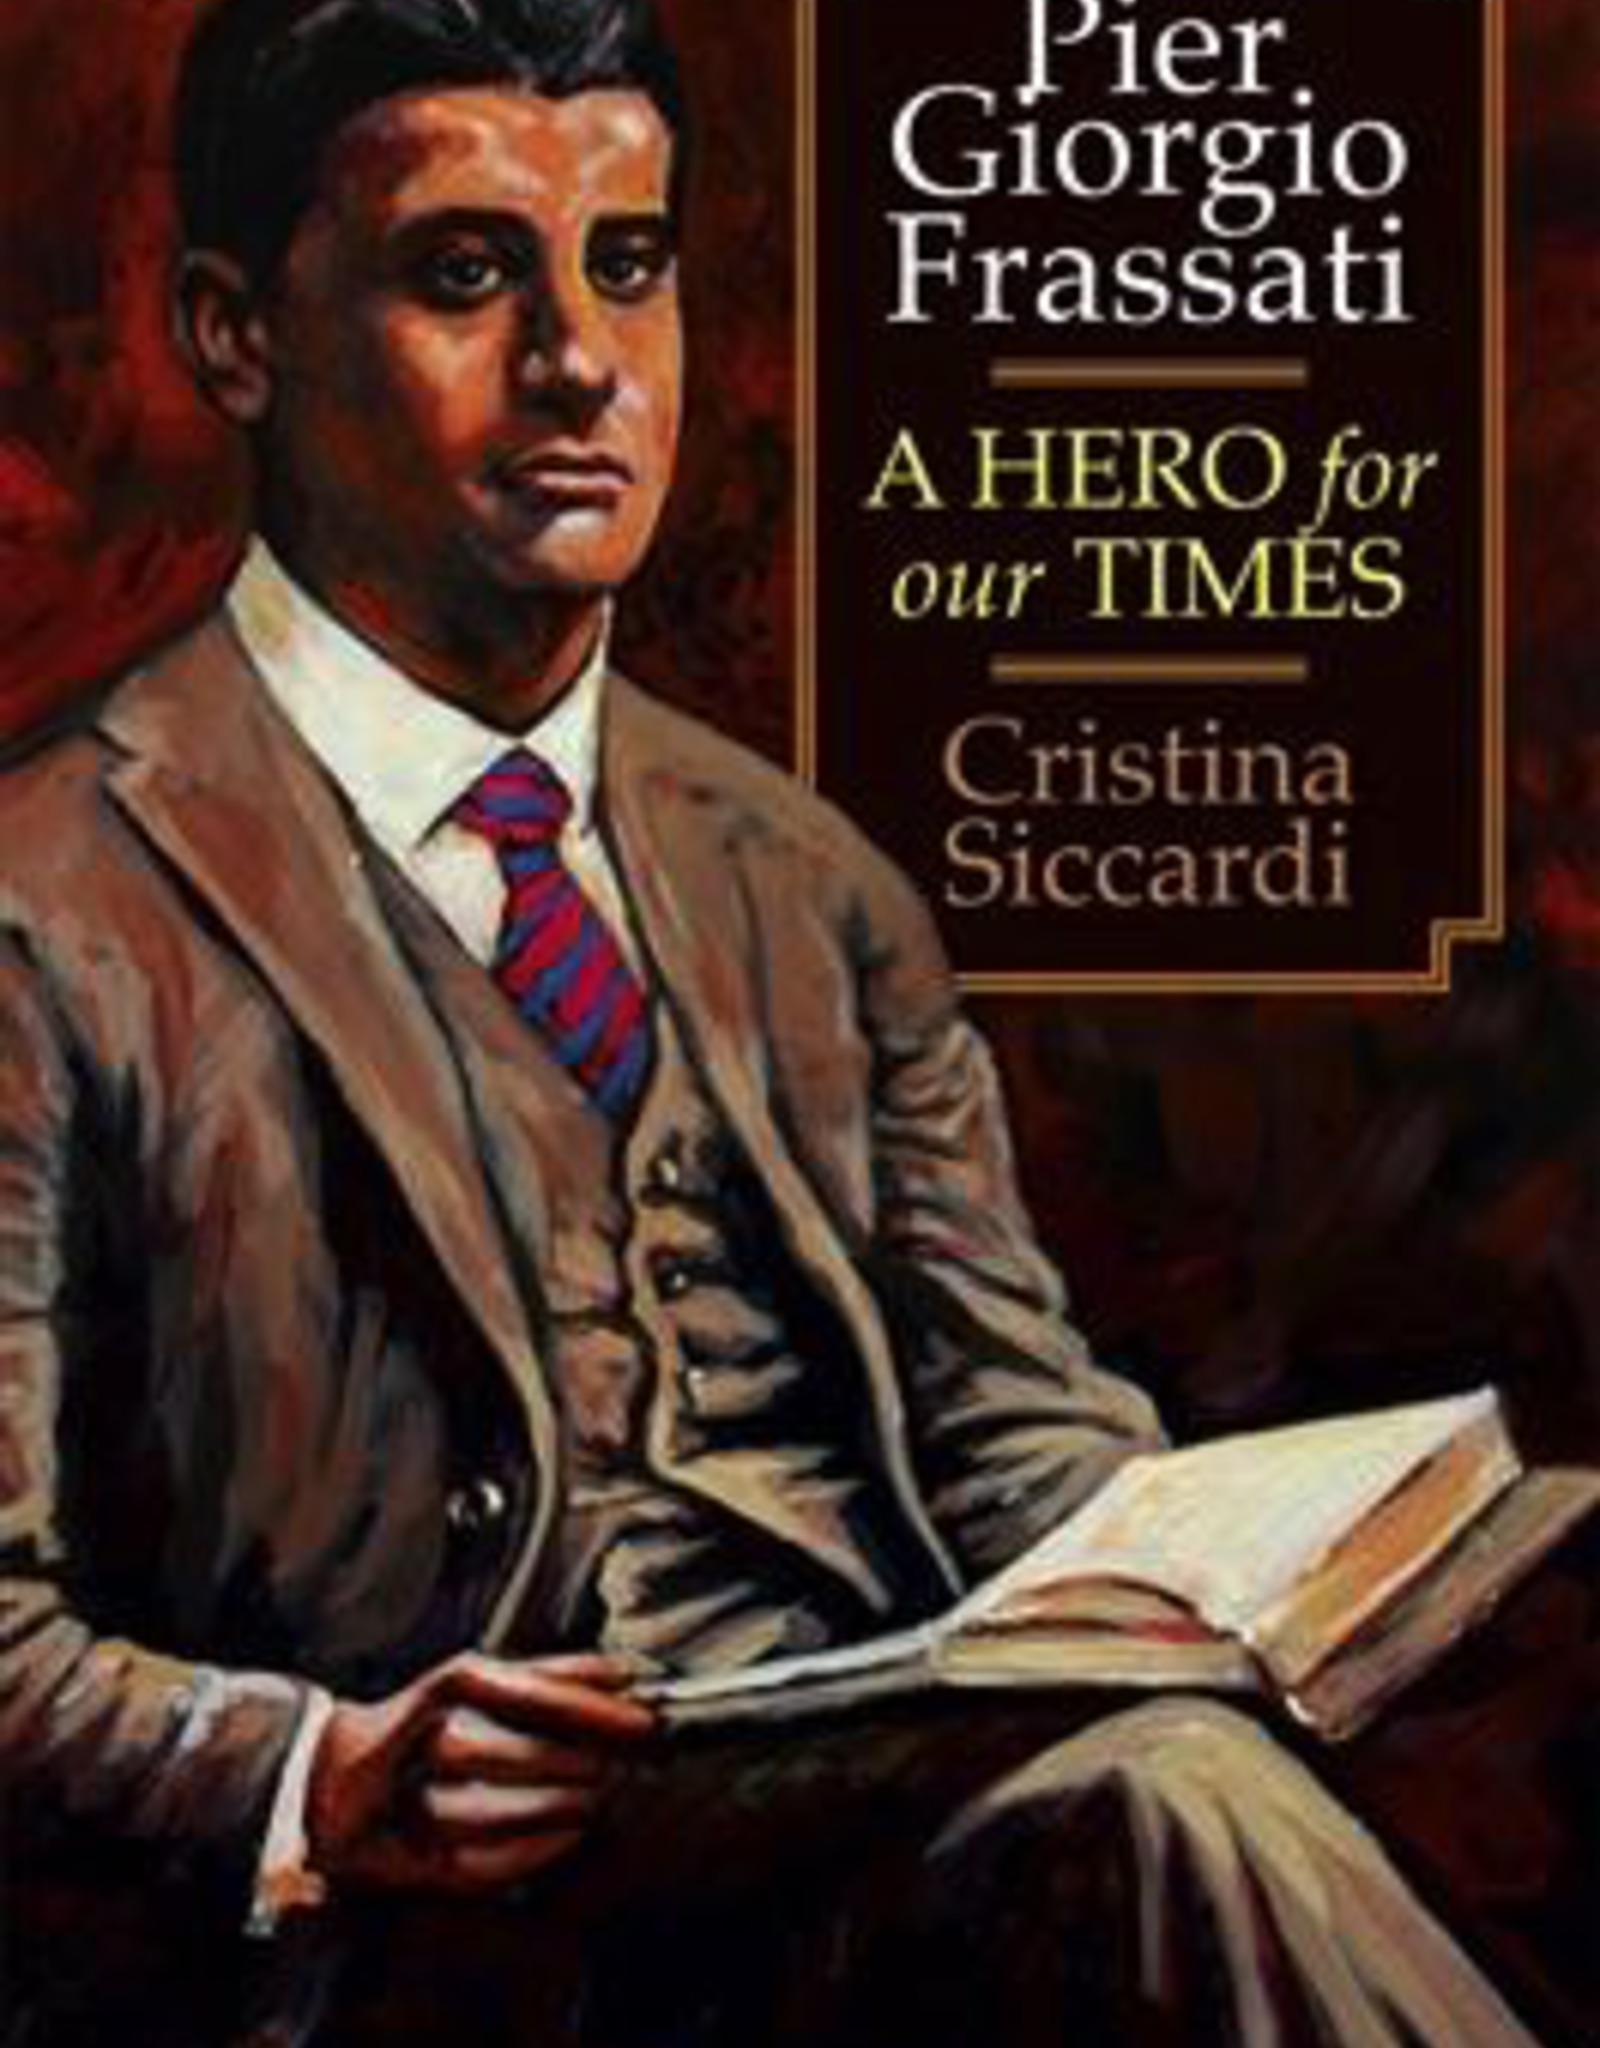 Ignatius Press Pier Giorgio Frassati: A Hero for Our Times by Cristina Siccardi